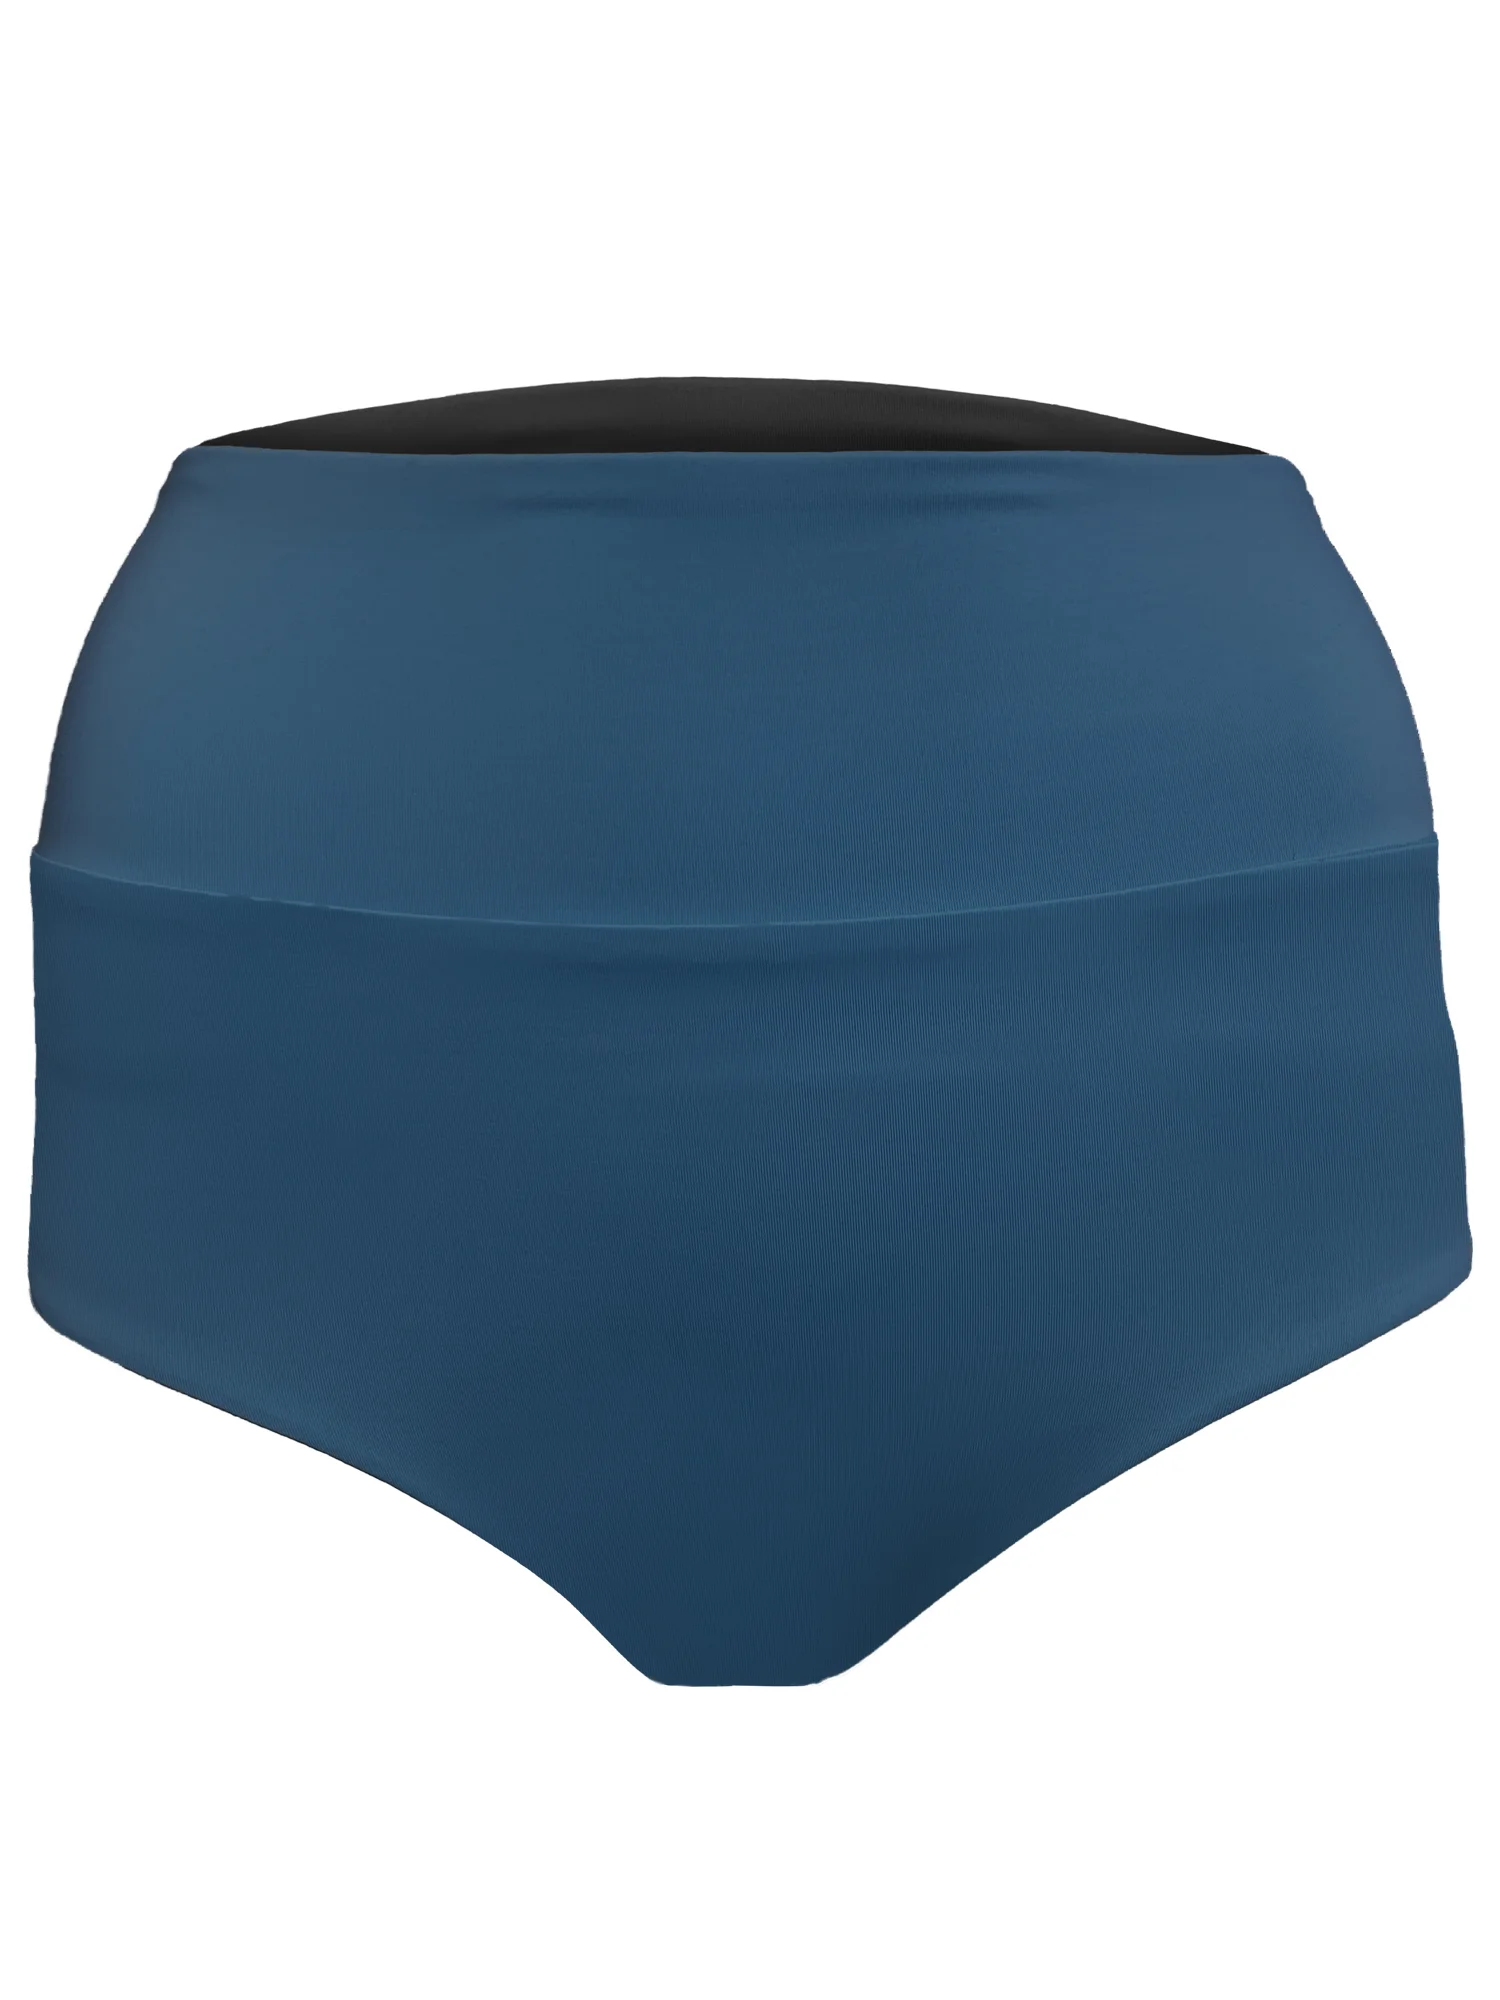 Bikini Shorts Wave Reversible Black & Navy Blue 5